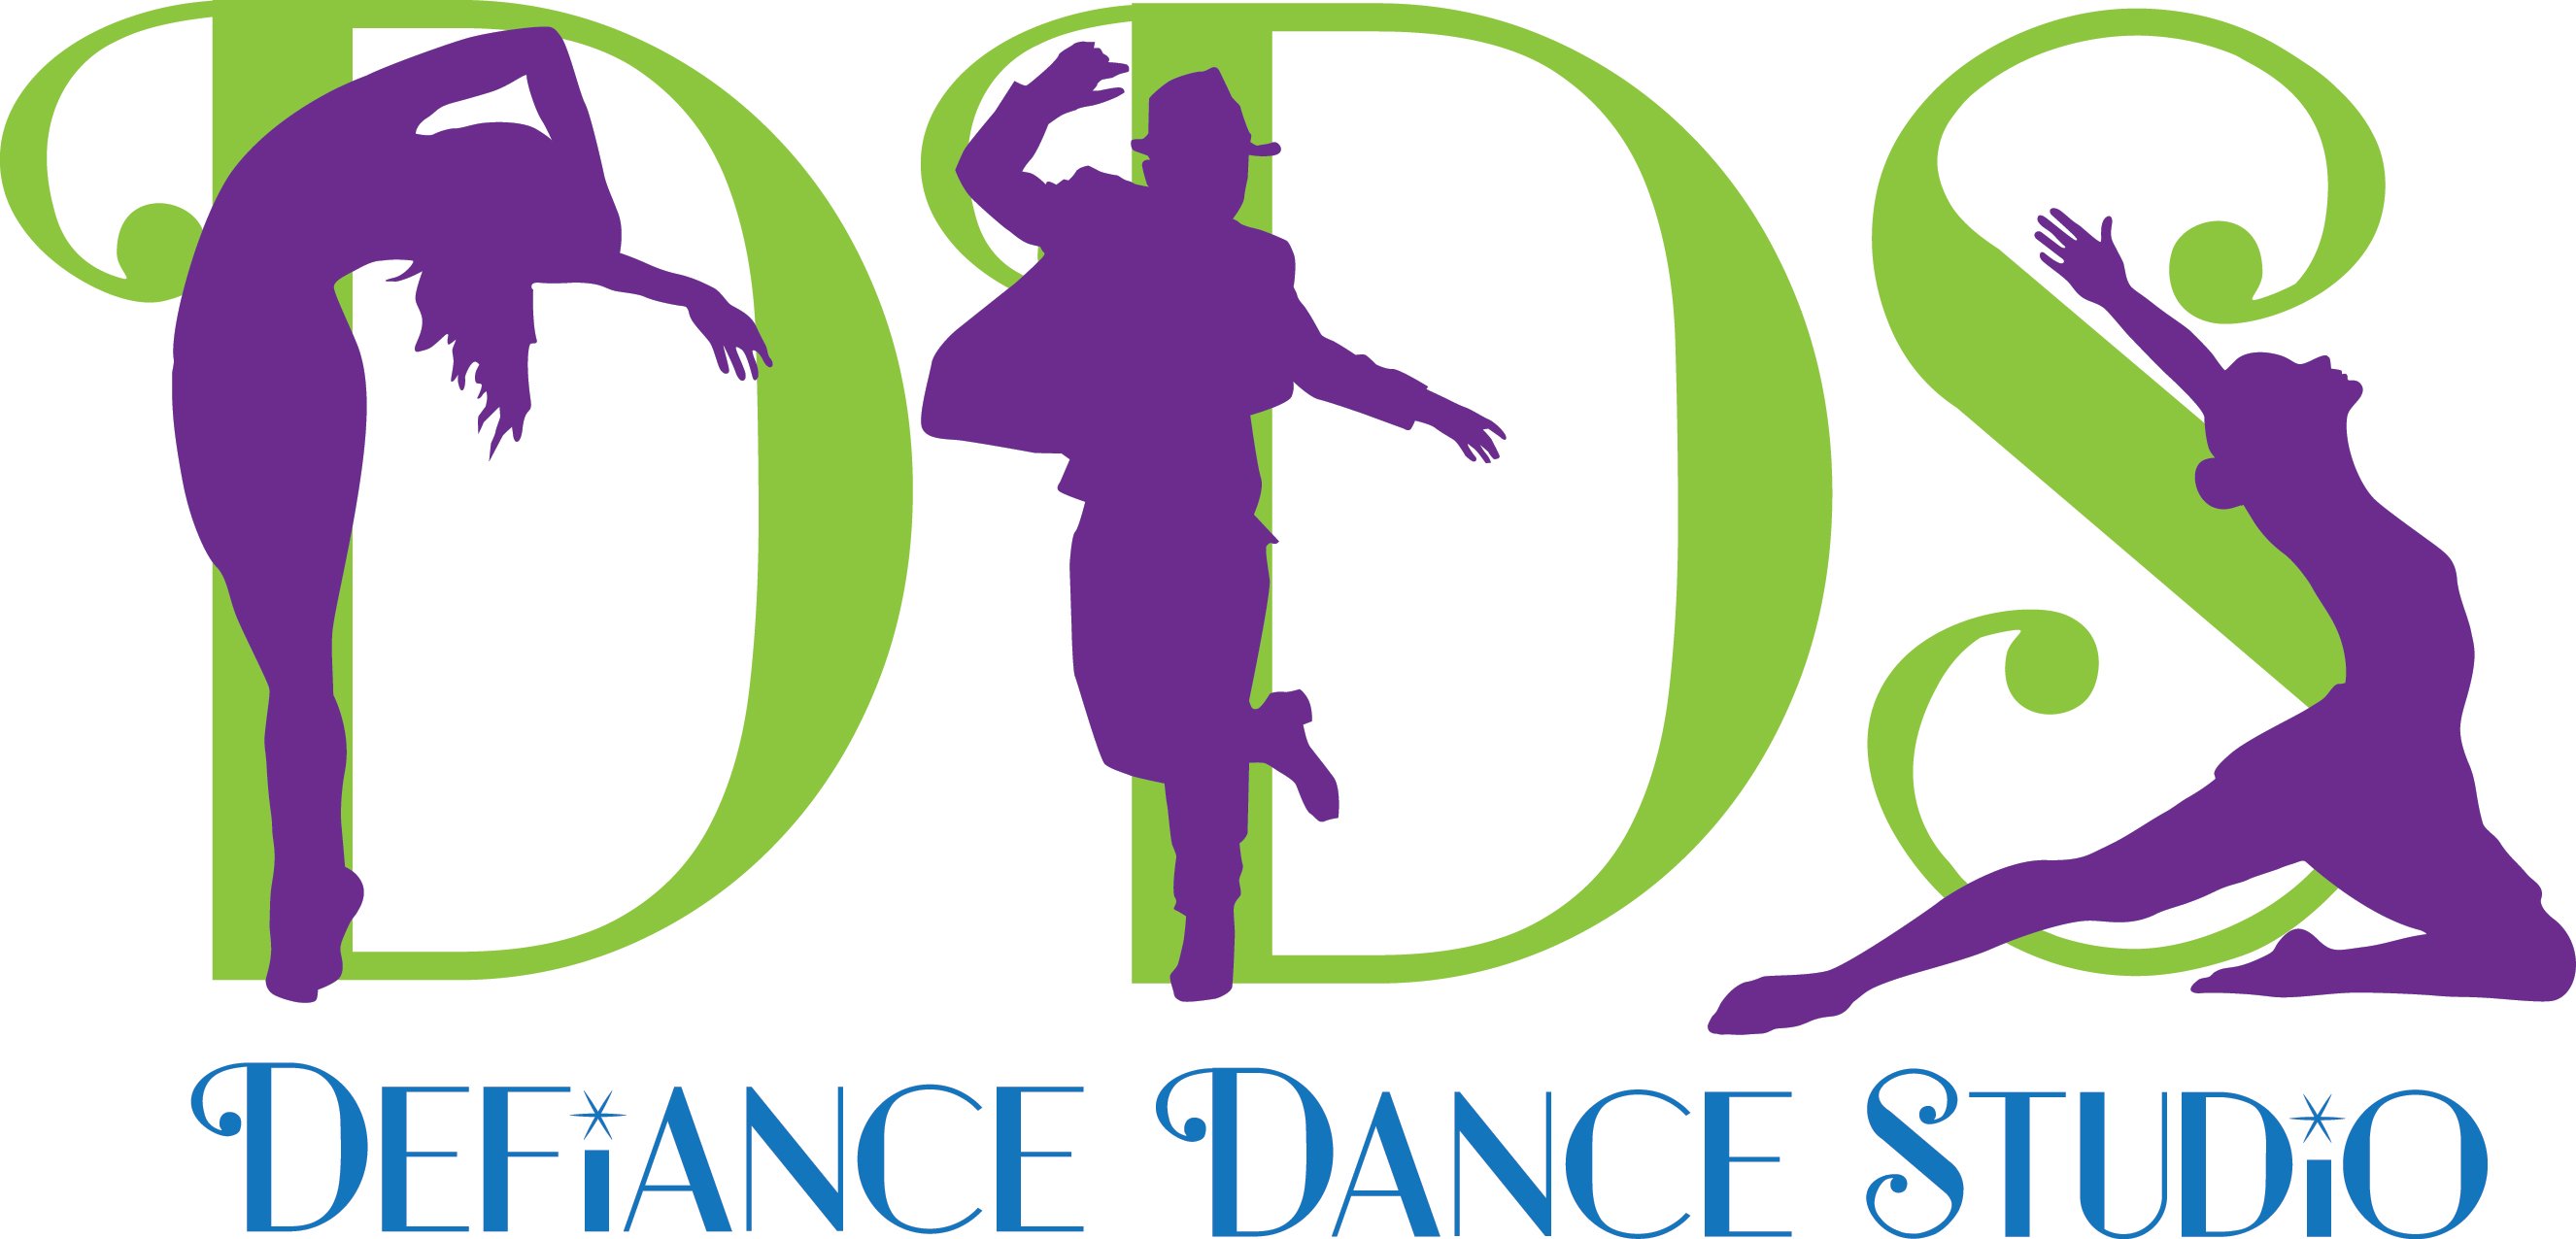 Defiance Dance Studio logo